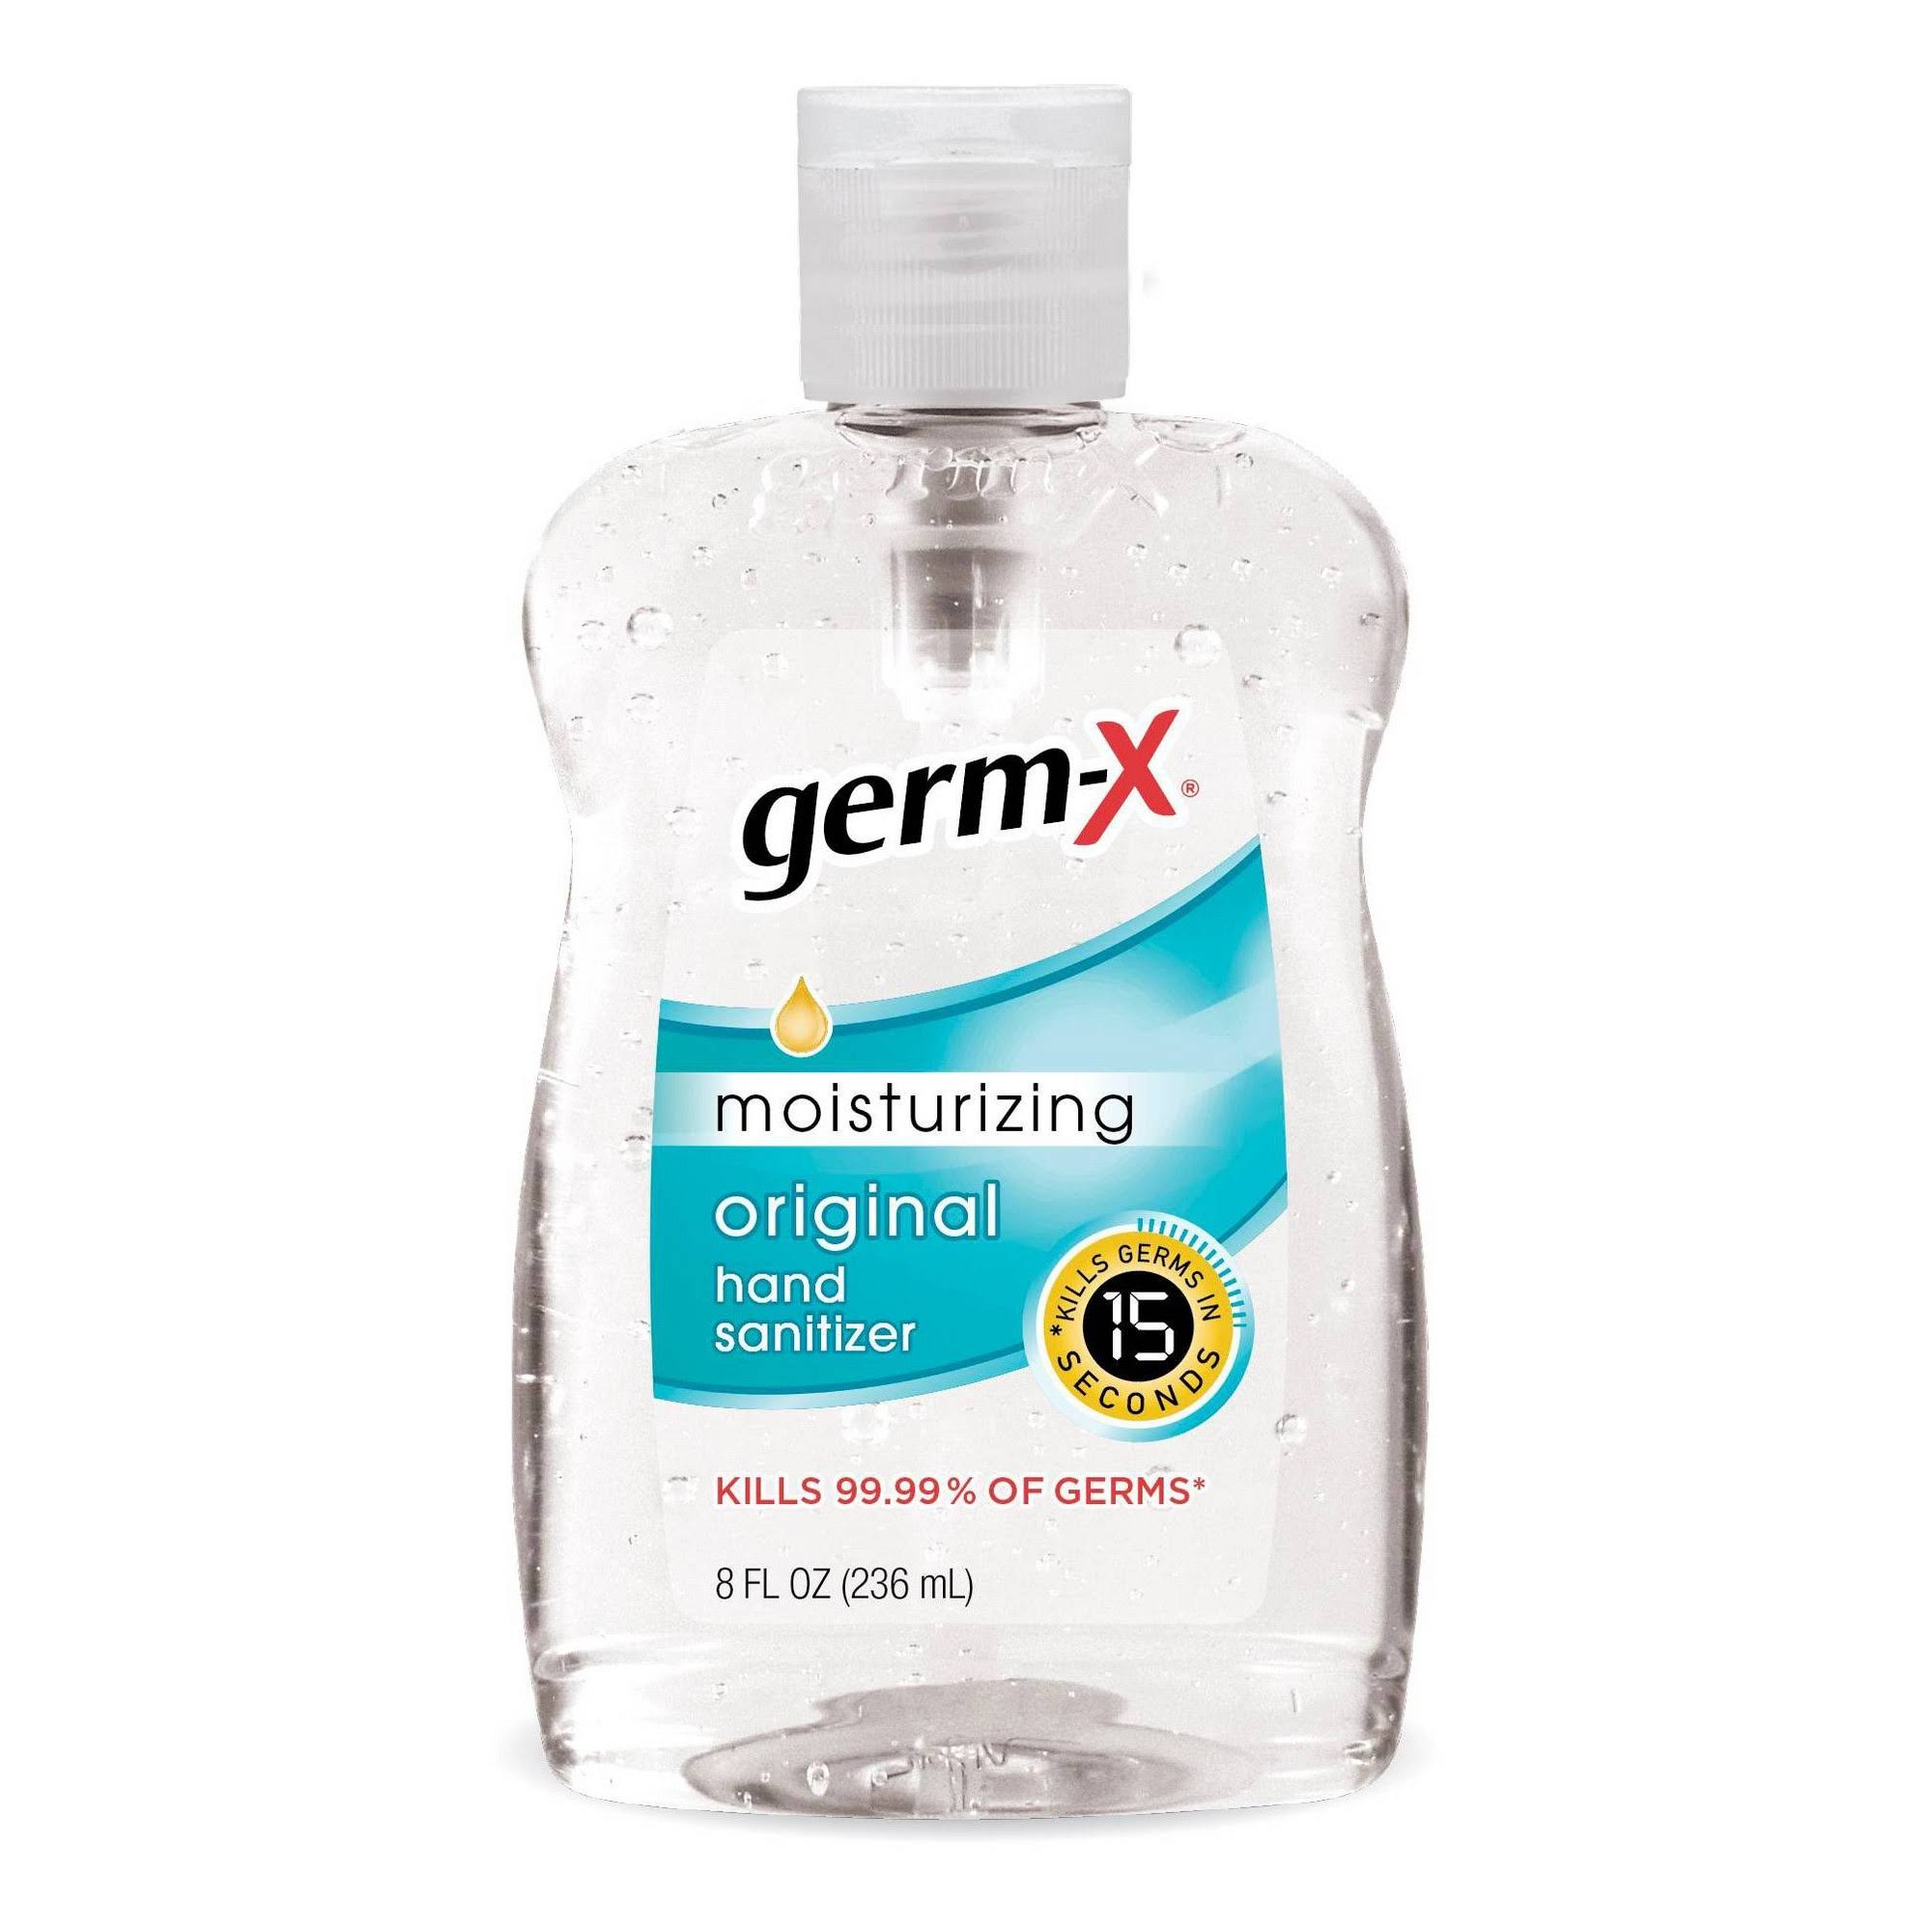 Germ X Hand Sanitizer, Original, Moisturizing - 8 fl oz